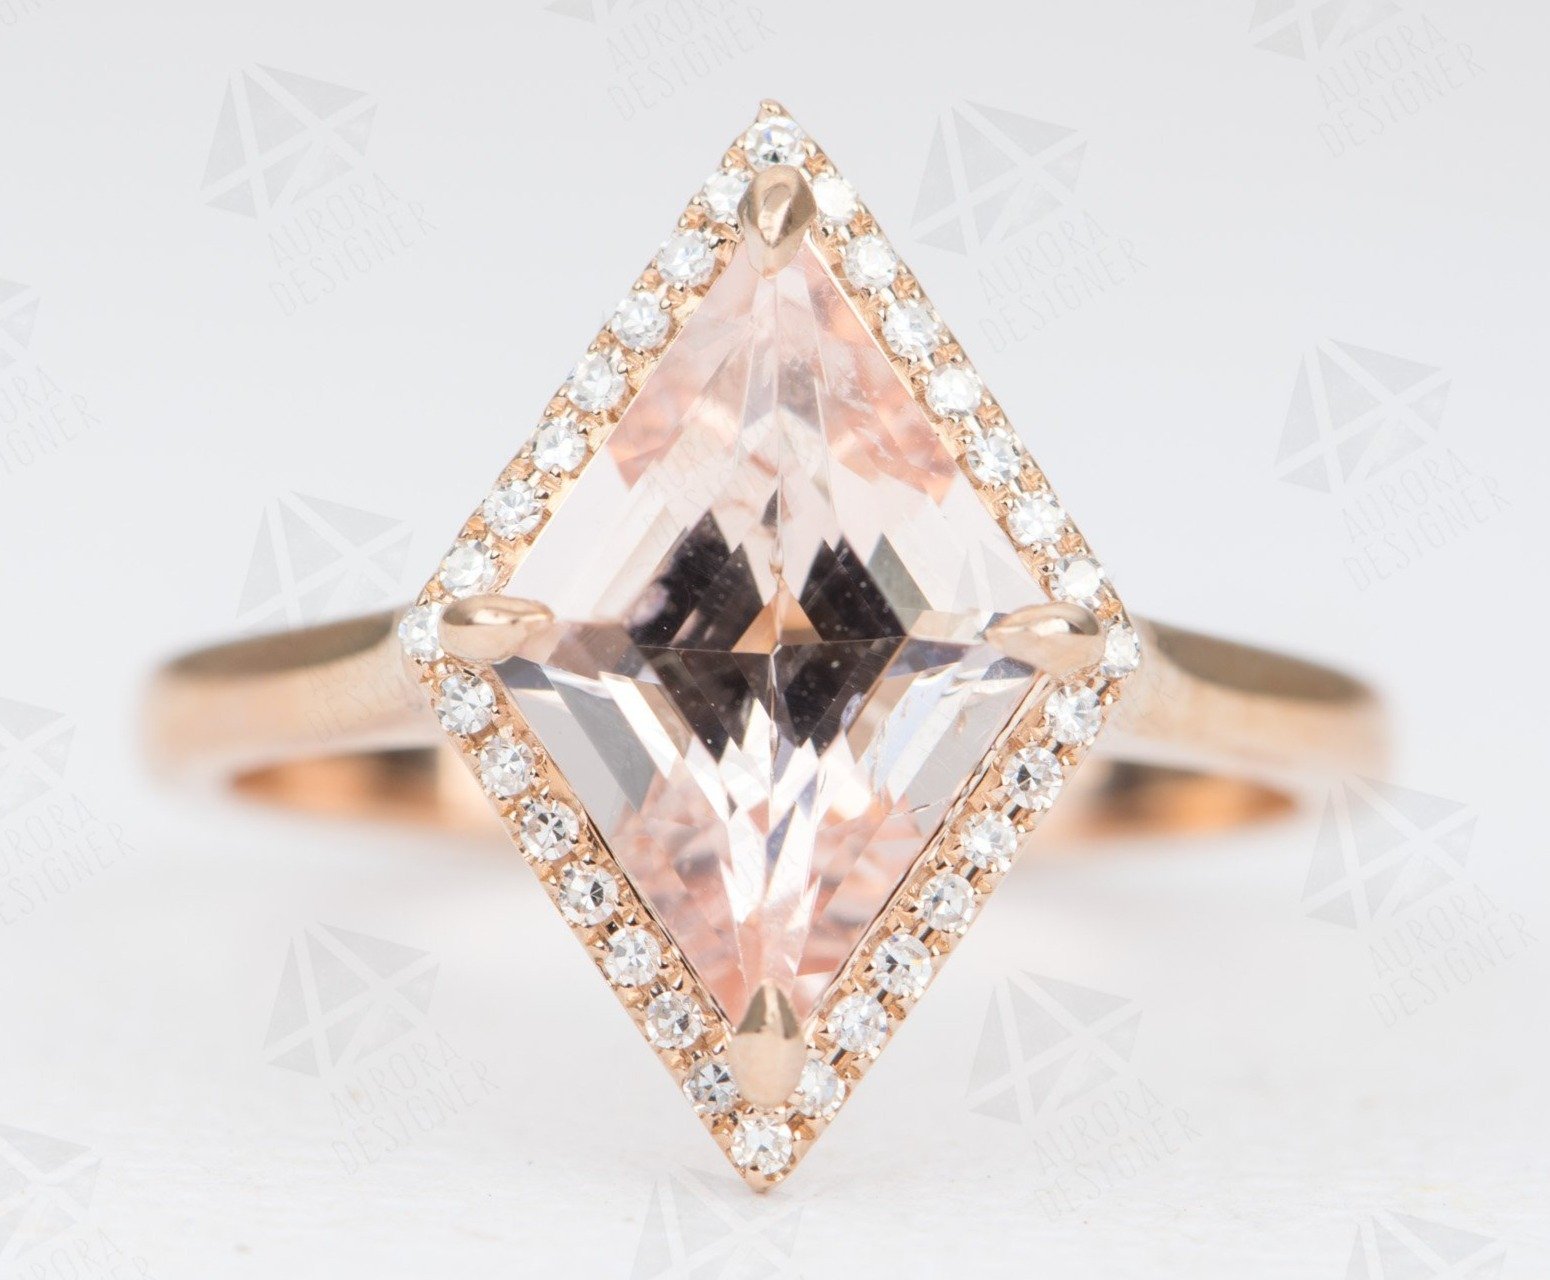 Sereena 14kt White Gold Two-Row Diamond Engagement Ring 4PR1823/75WZTFY